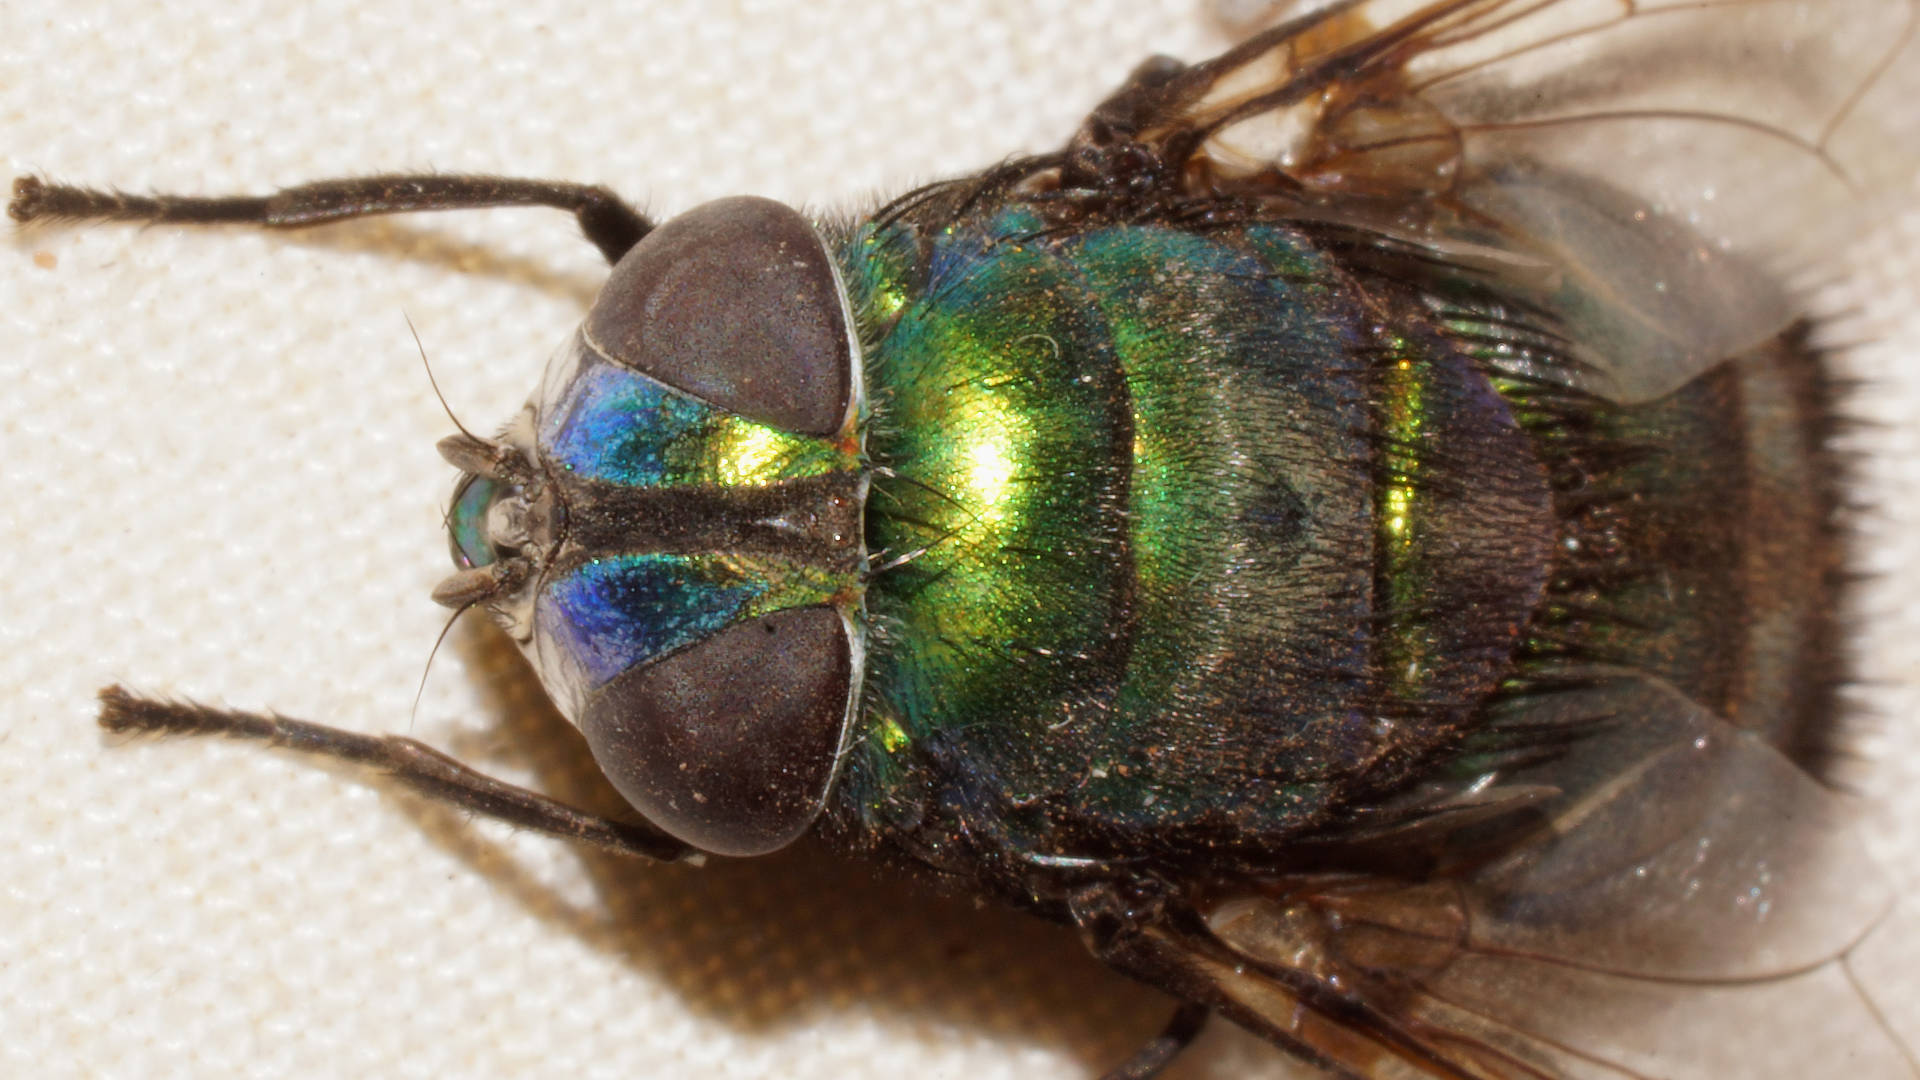 Metallic-faced Rutilia Fly (Rutilia simplex)